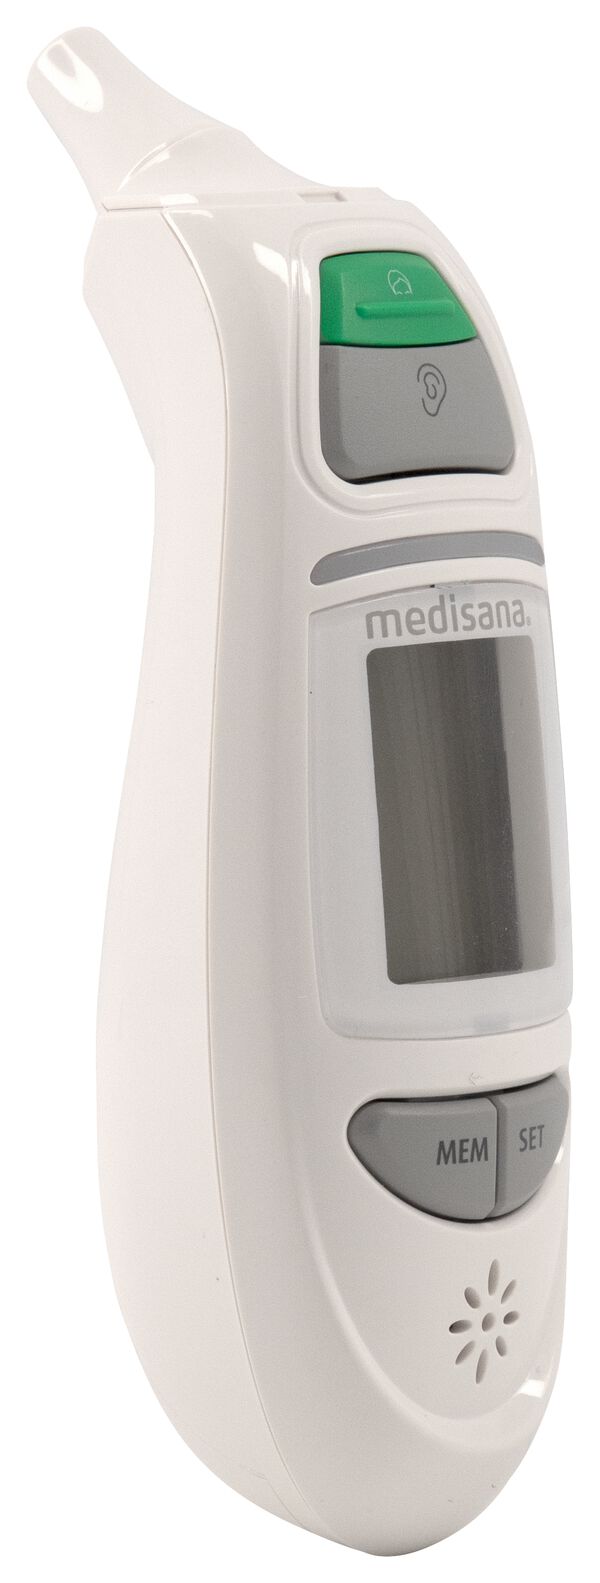 thermomètre multifonctionnel infrarouge Medisana - 11972023 - HEMA